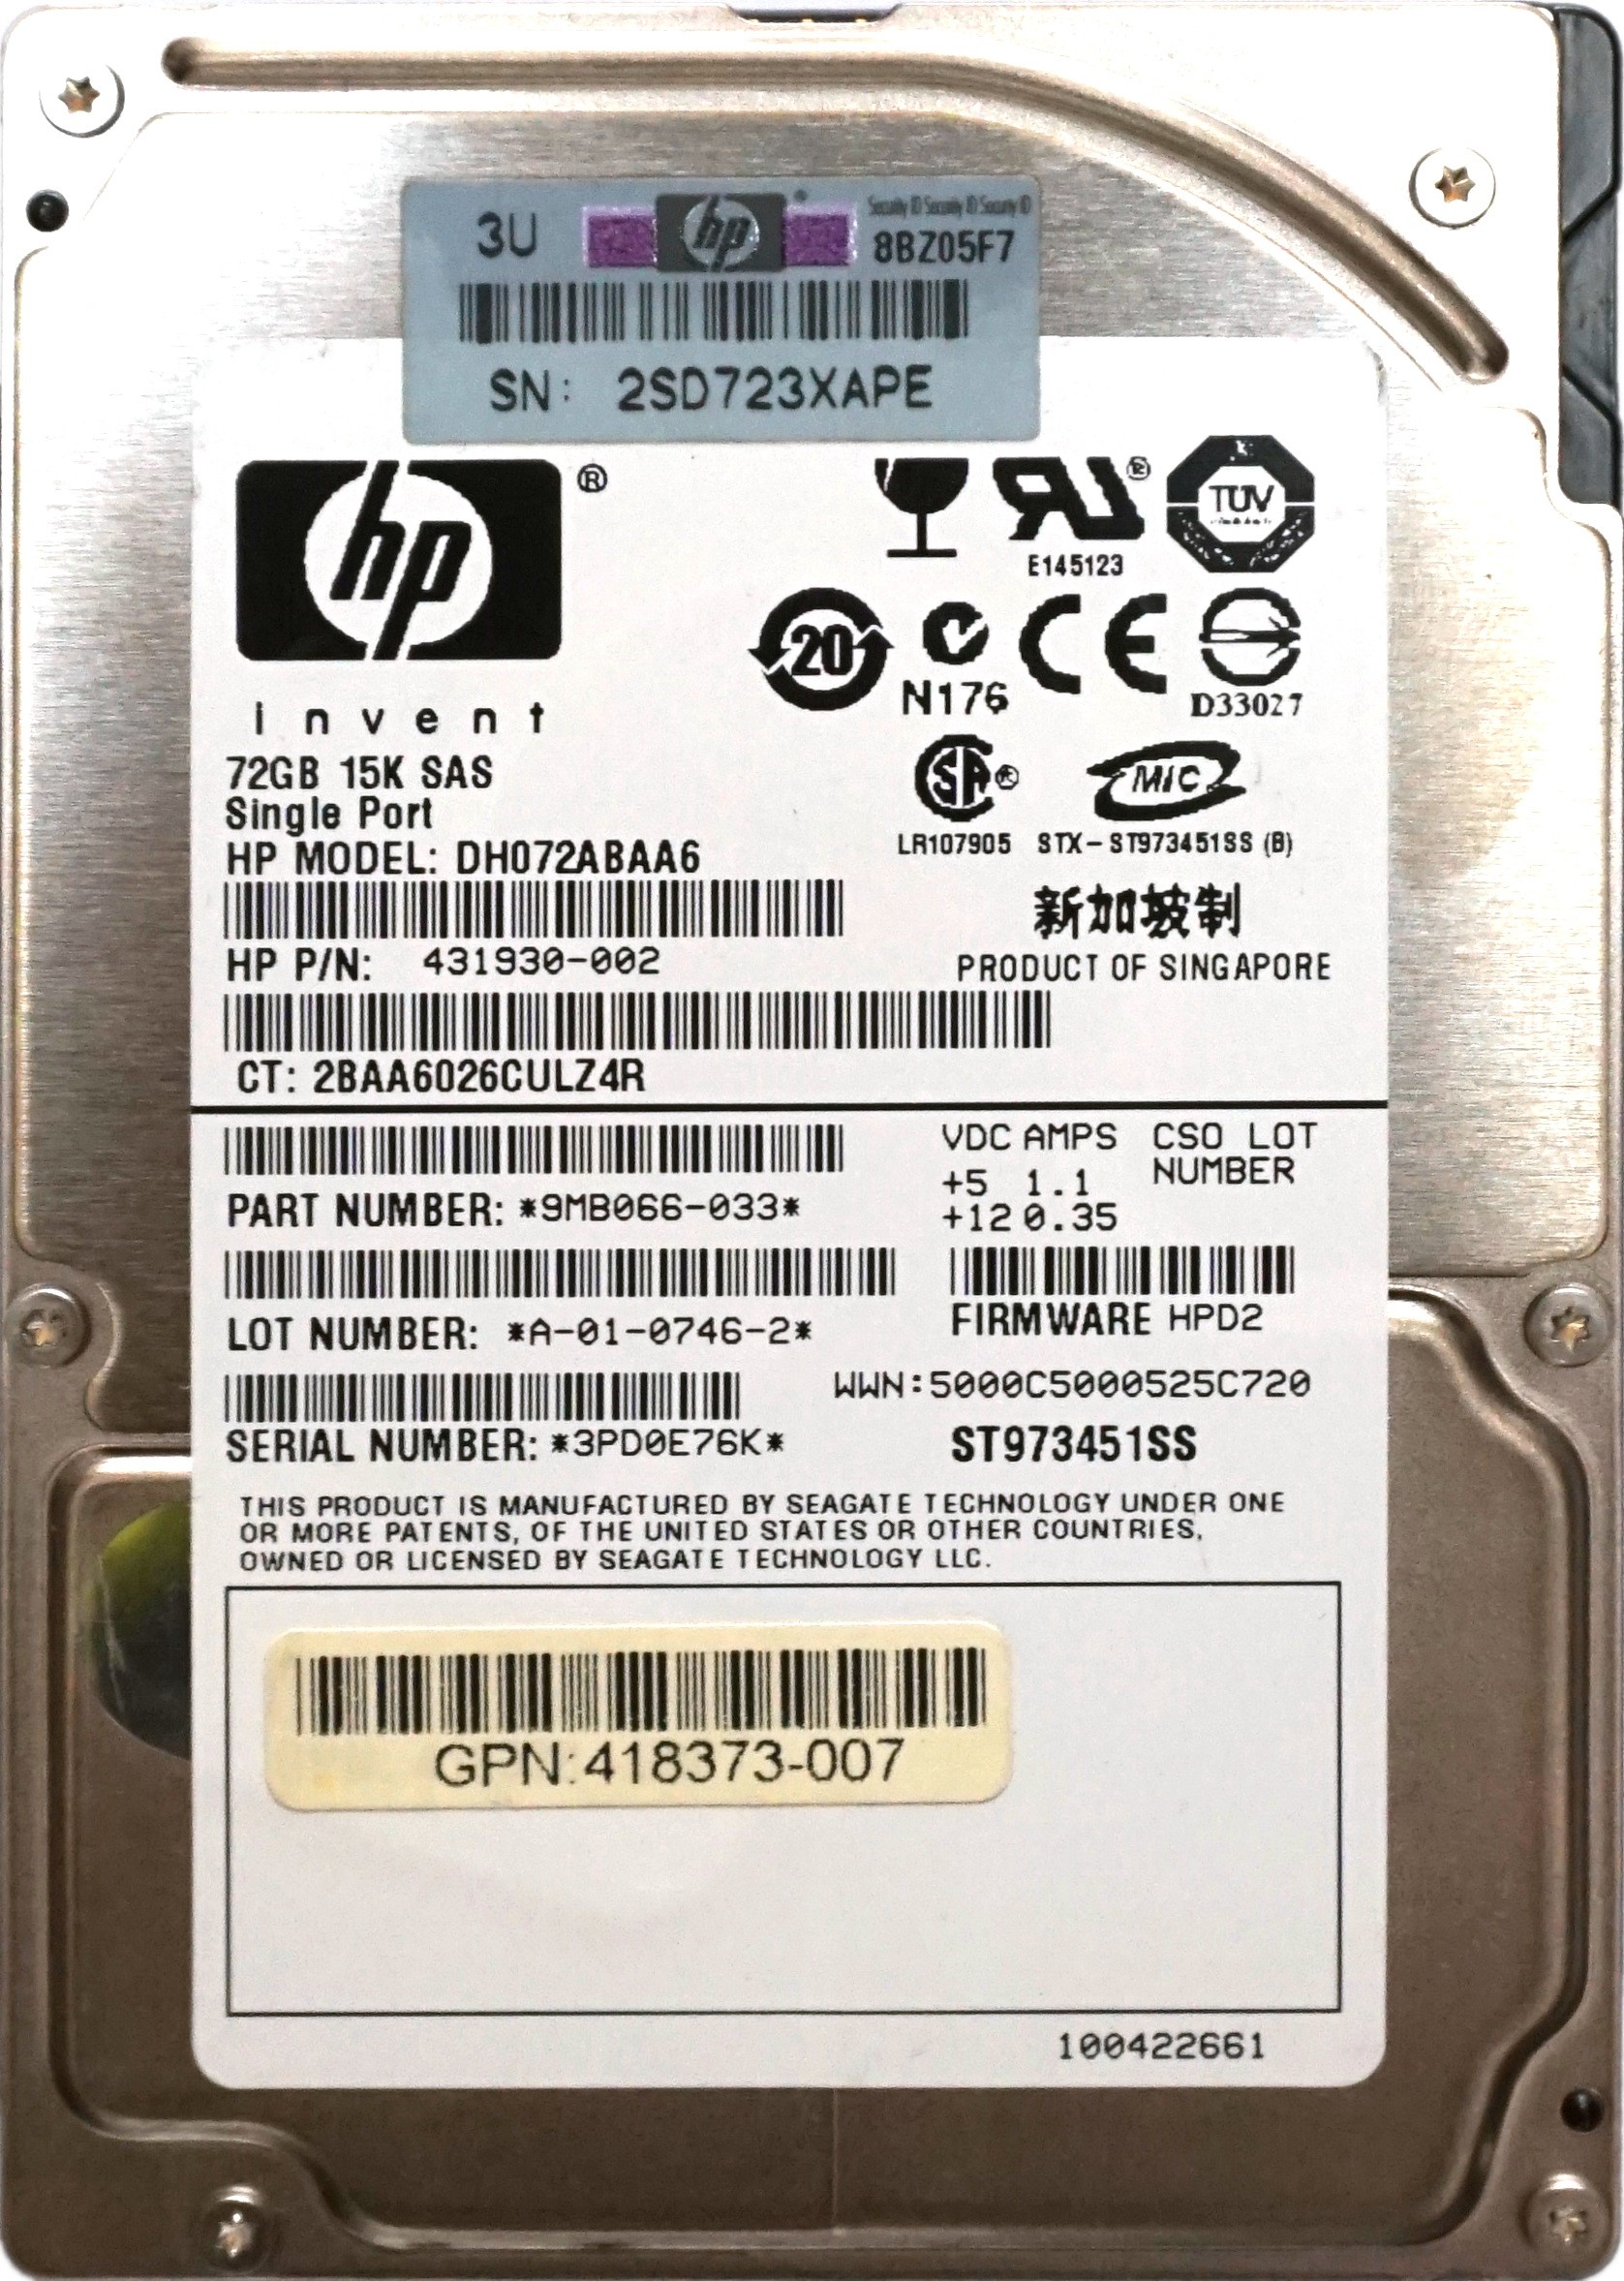 HP (431930-002) 72GB SAS (2.5") 3Gb/s 15K HDD